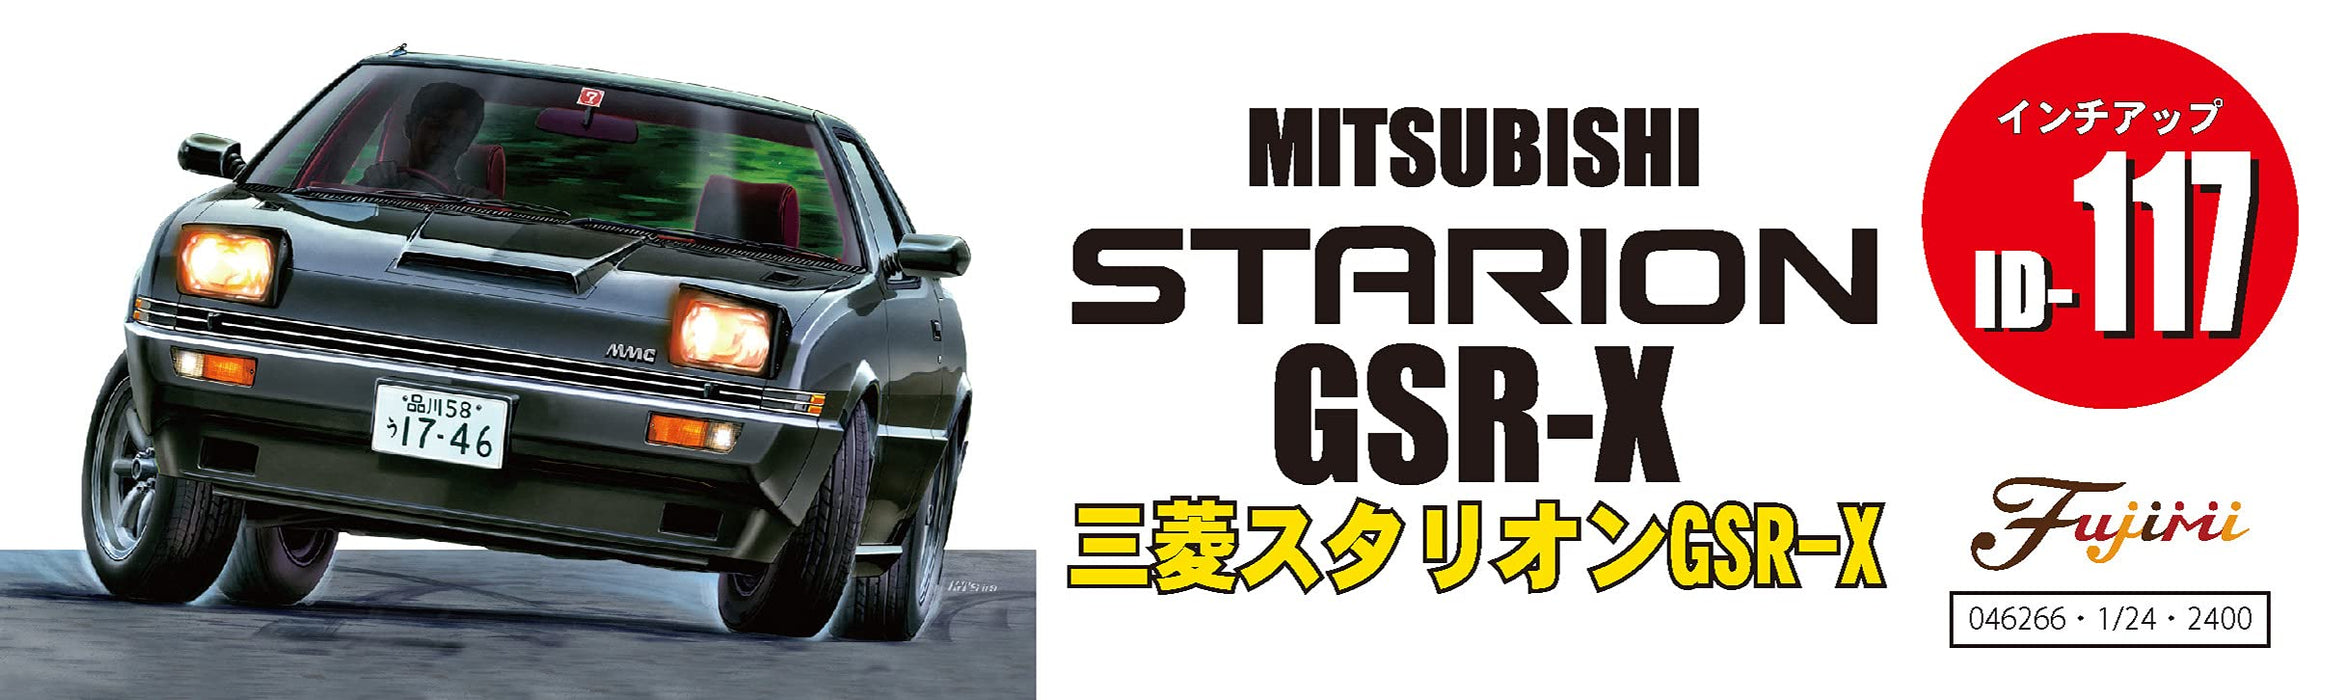 FUJIMI Inch Up 1/24 No.117 Mitsubishi Starion Gsr-X Modèle en plastique